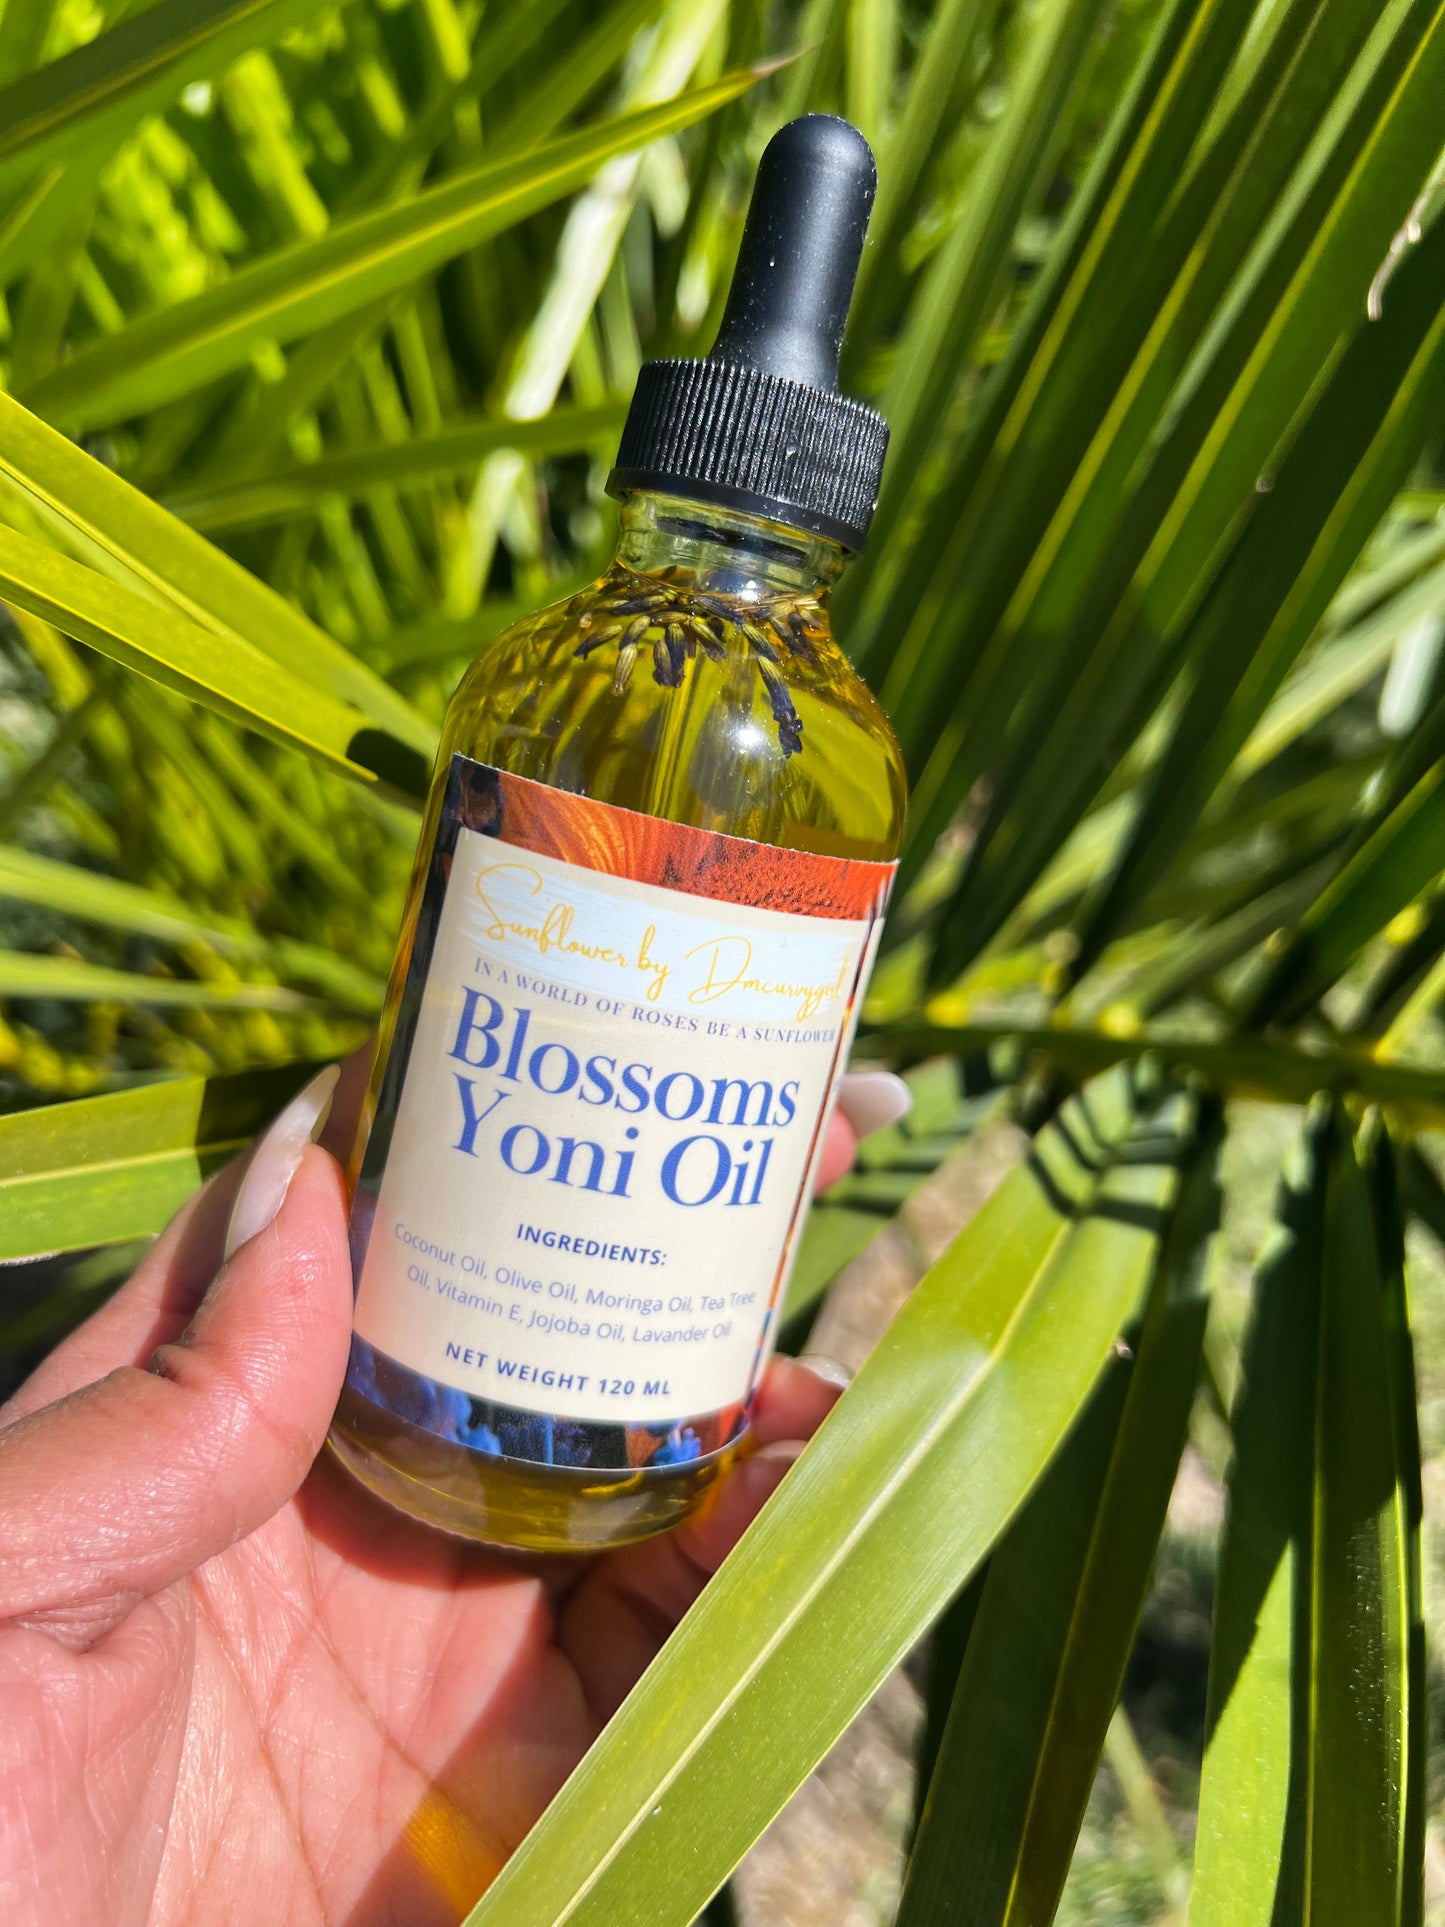 Blooming Yoni Oil